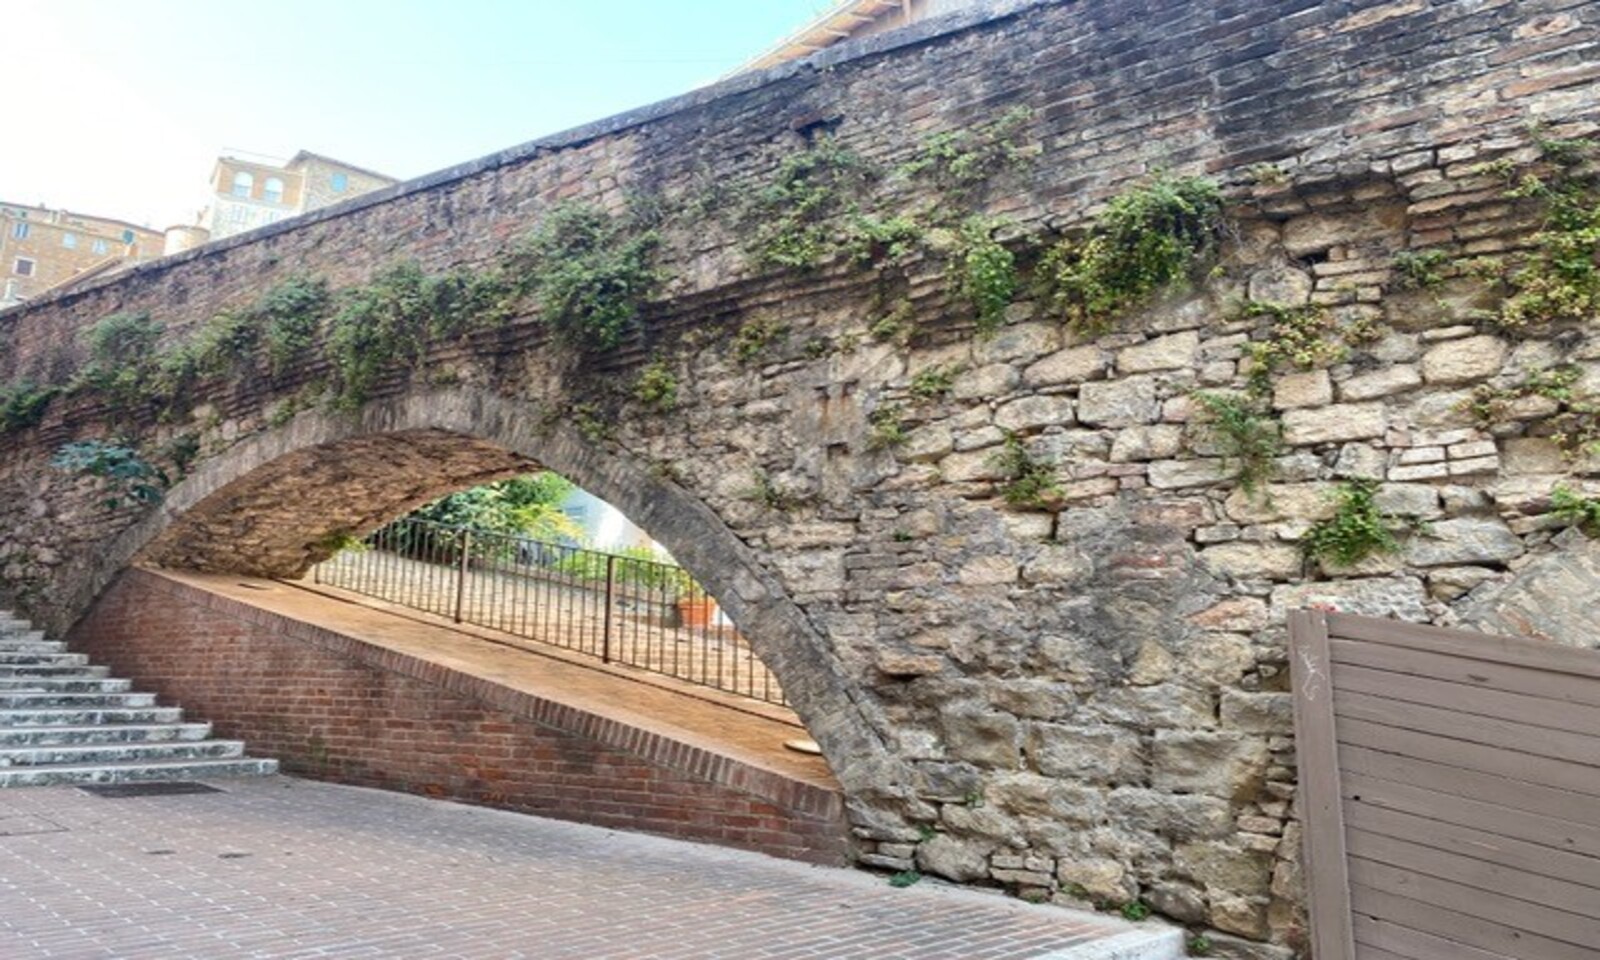 Cucinelli restaura l’acquedotto medievale di Perugia